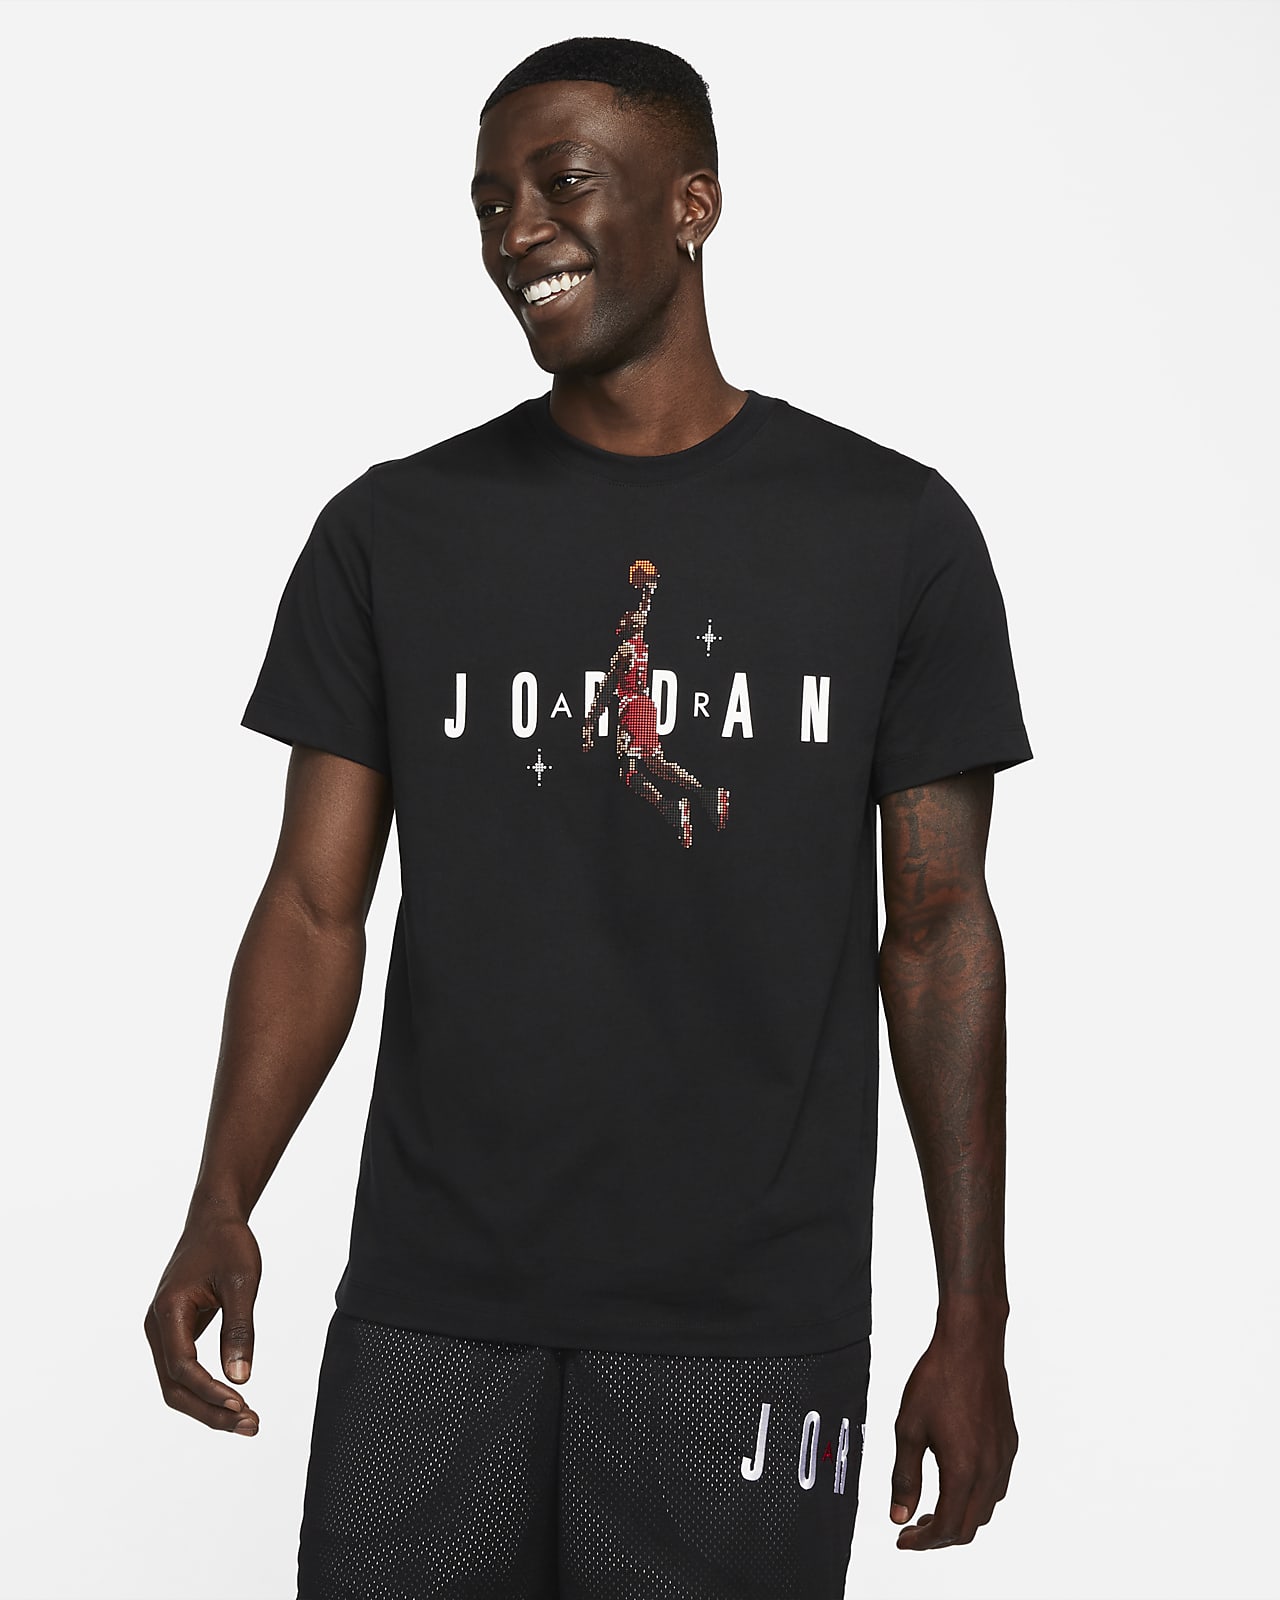 Jordan Brand Holiday Men's Short-Sleeve T-Shirt. Nike.com